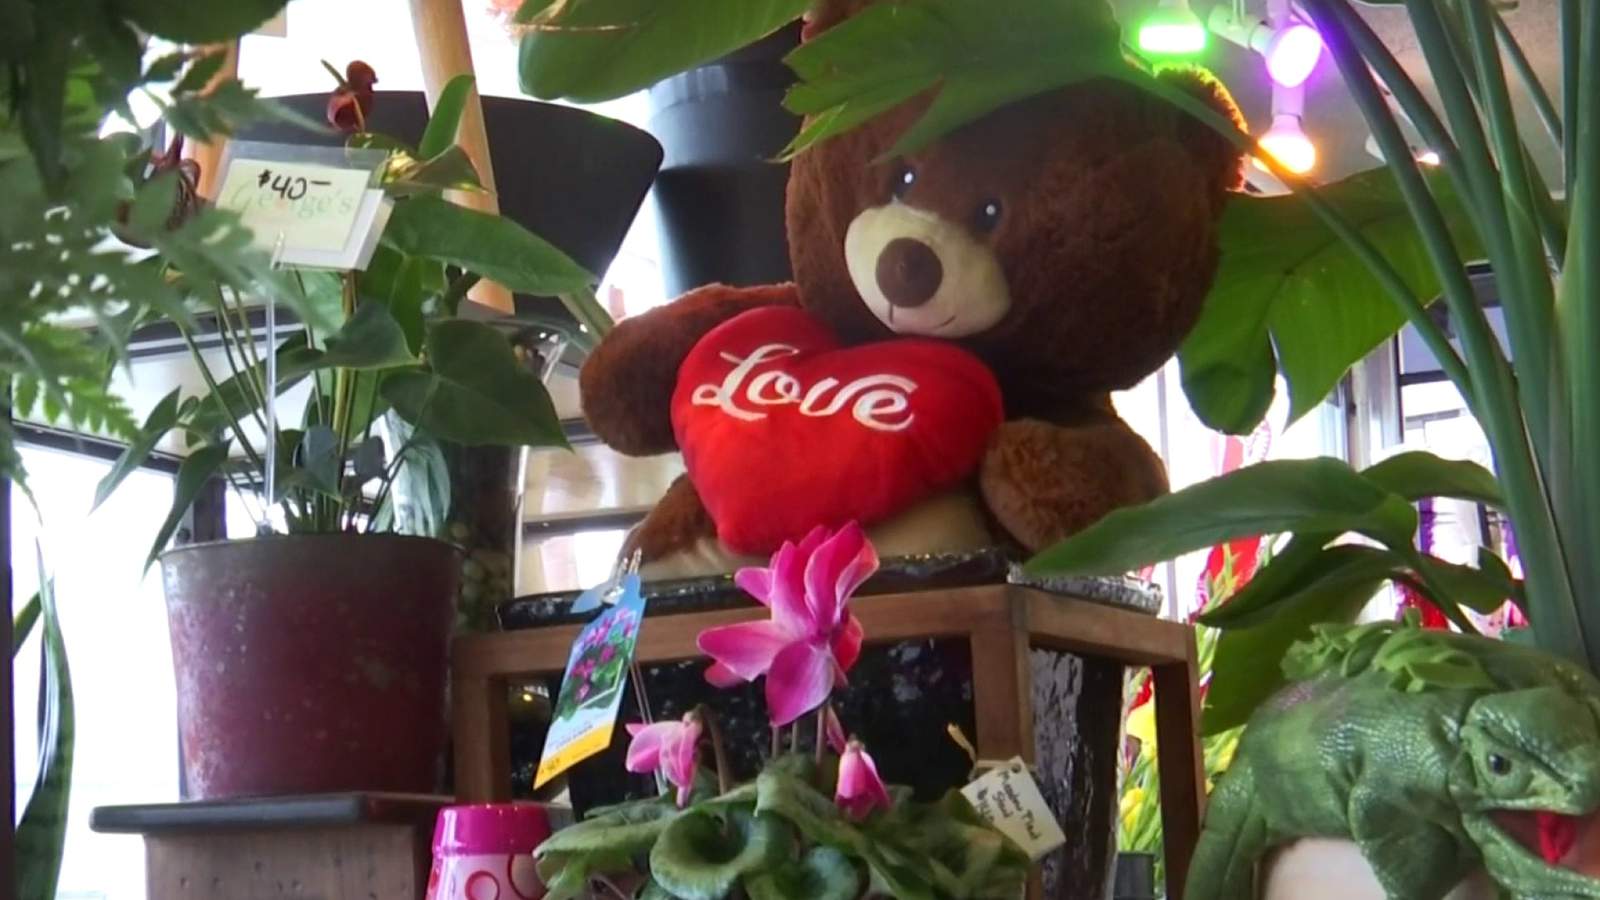 George’s Flowers in Roanoke prepares for busiest Valentine’s Day yet